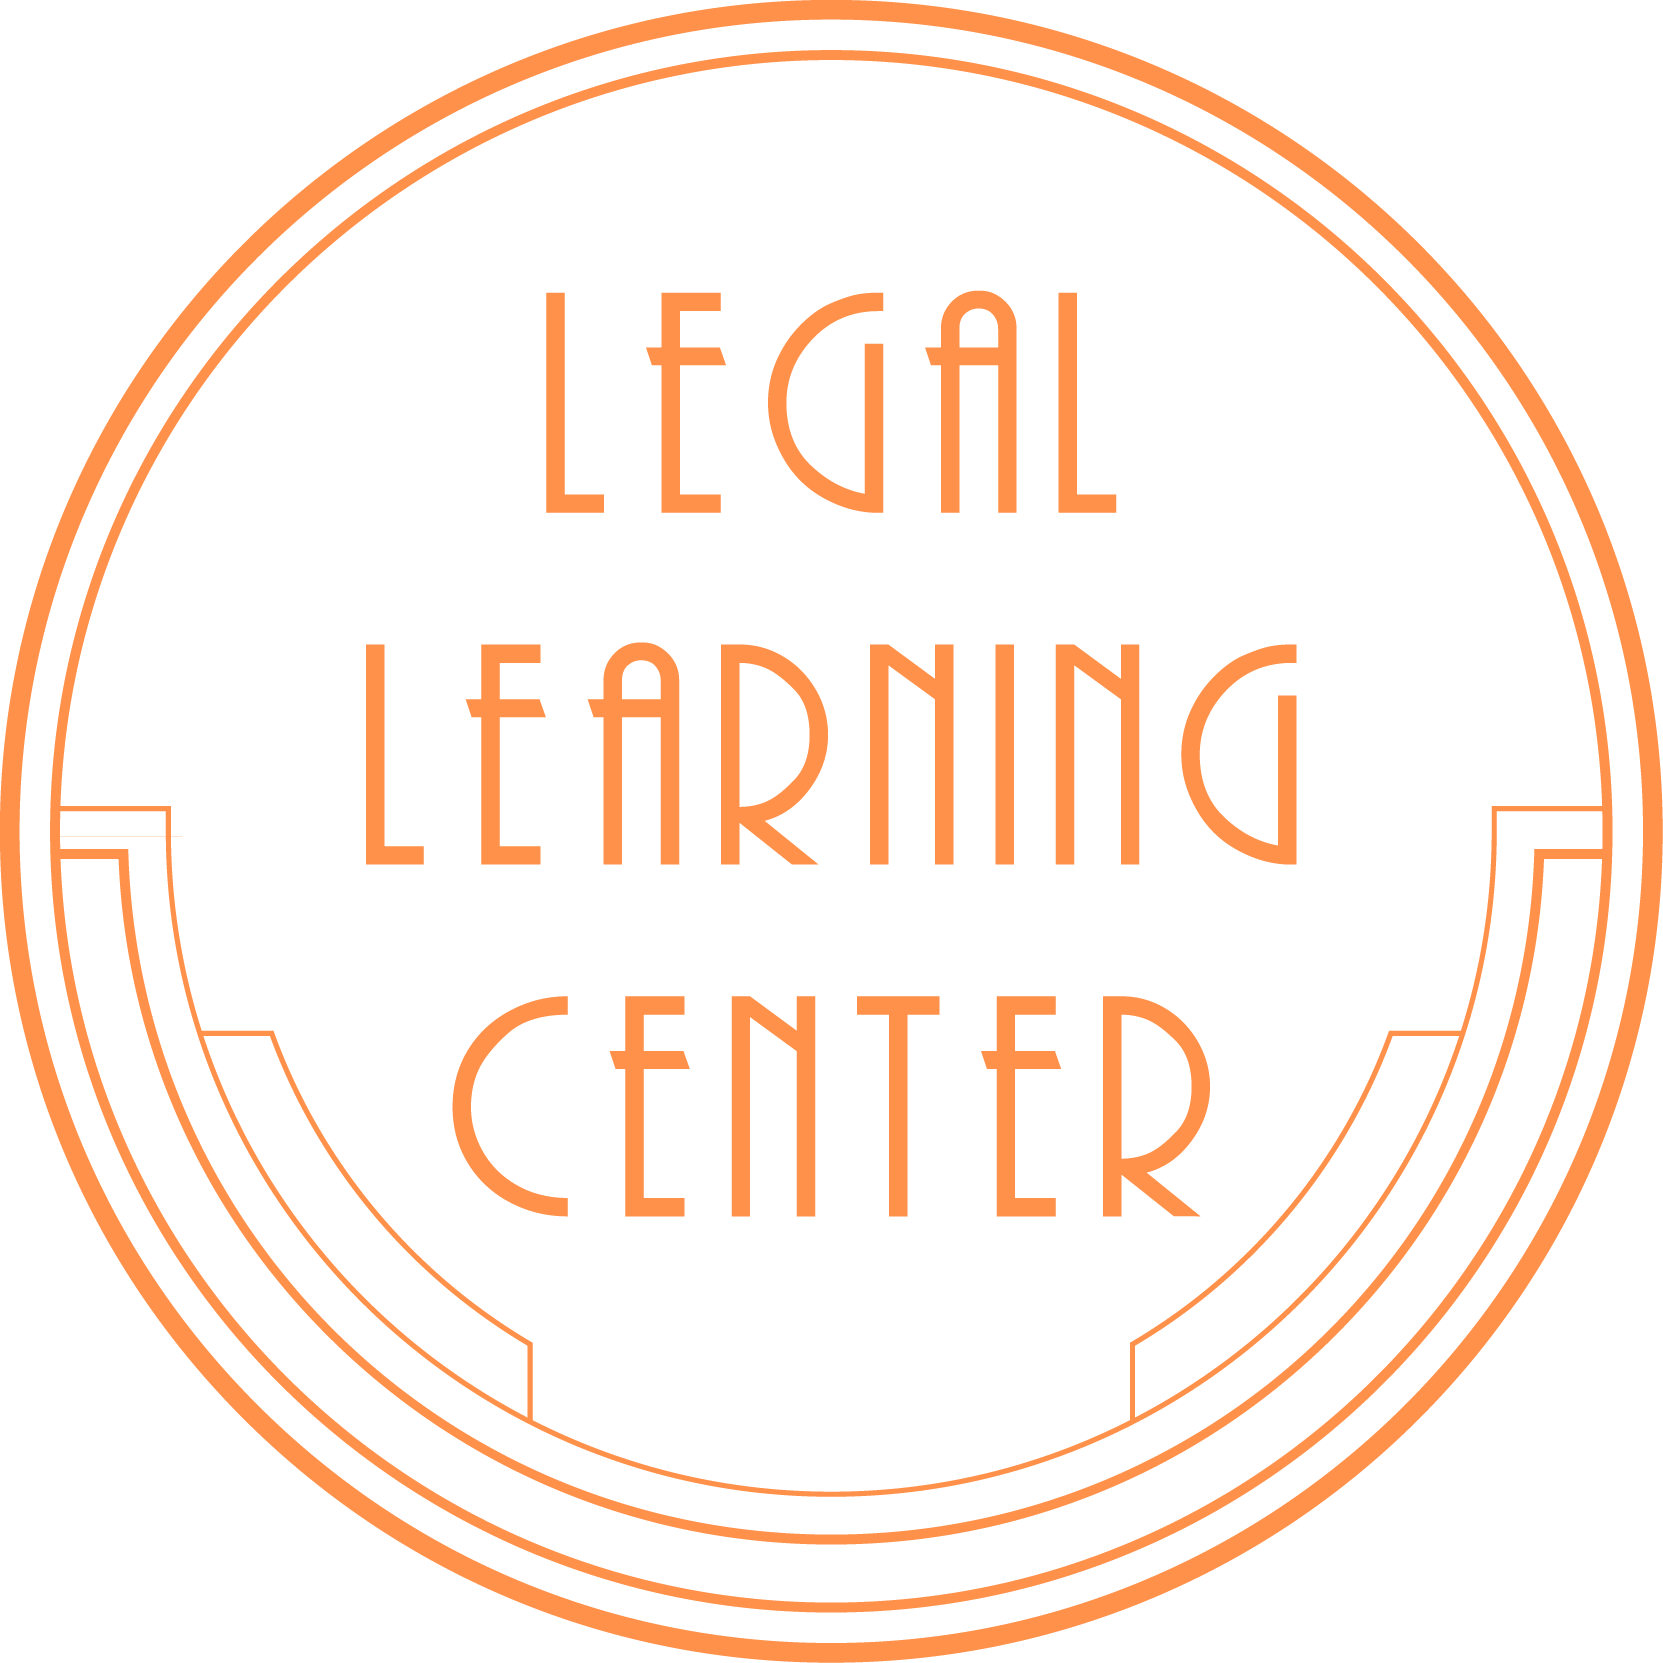 Legal Learning Center